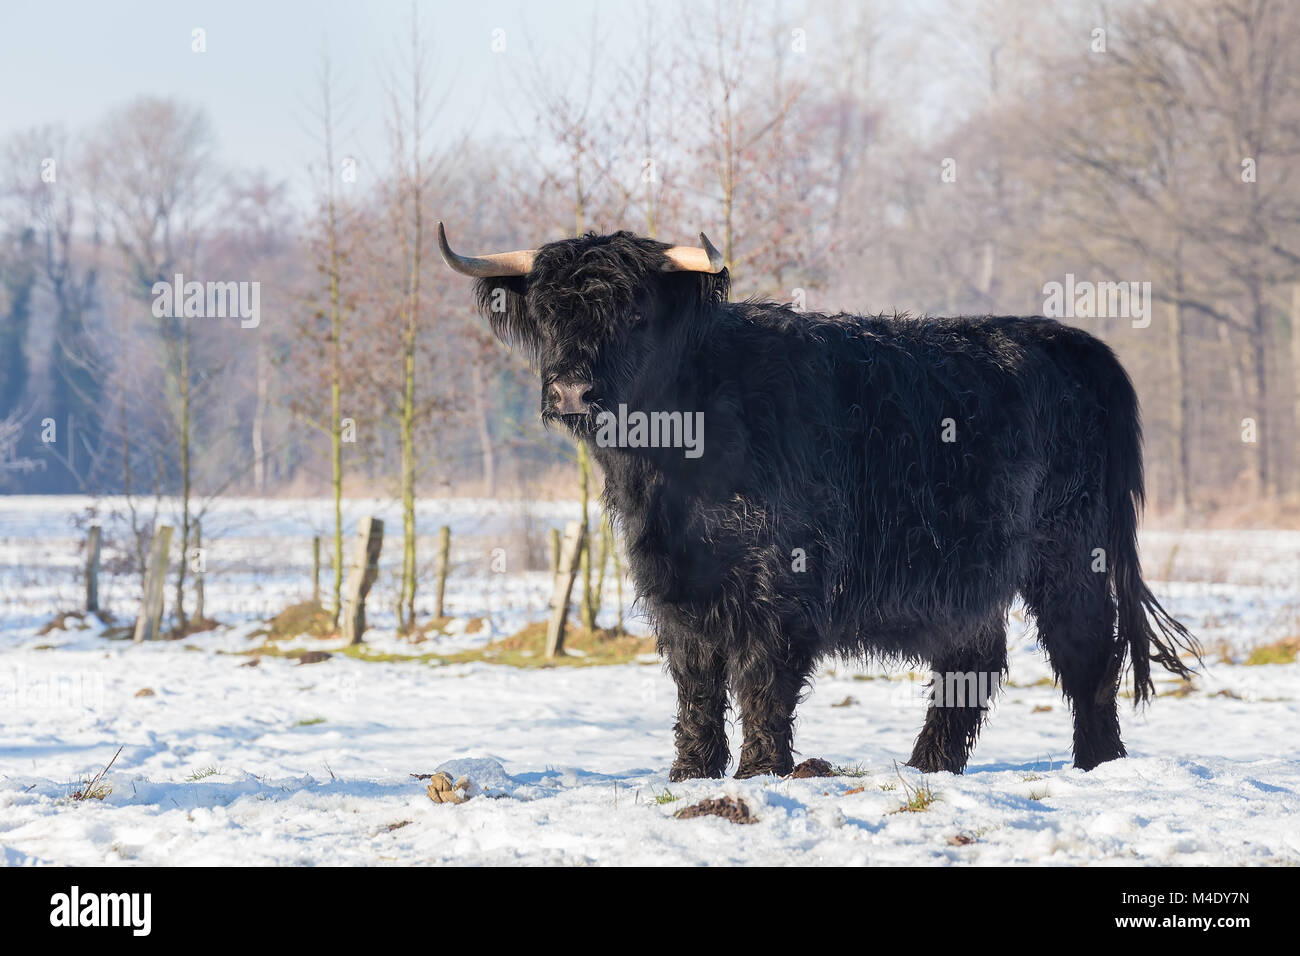 Black scottish highlander cow in winter snow Stock Photo